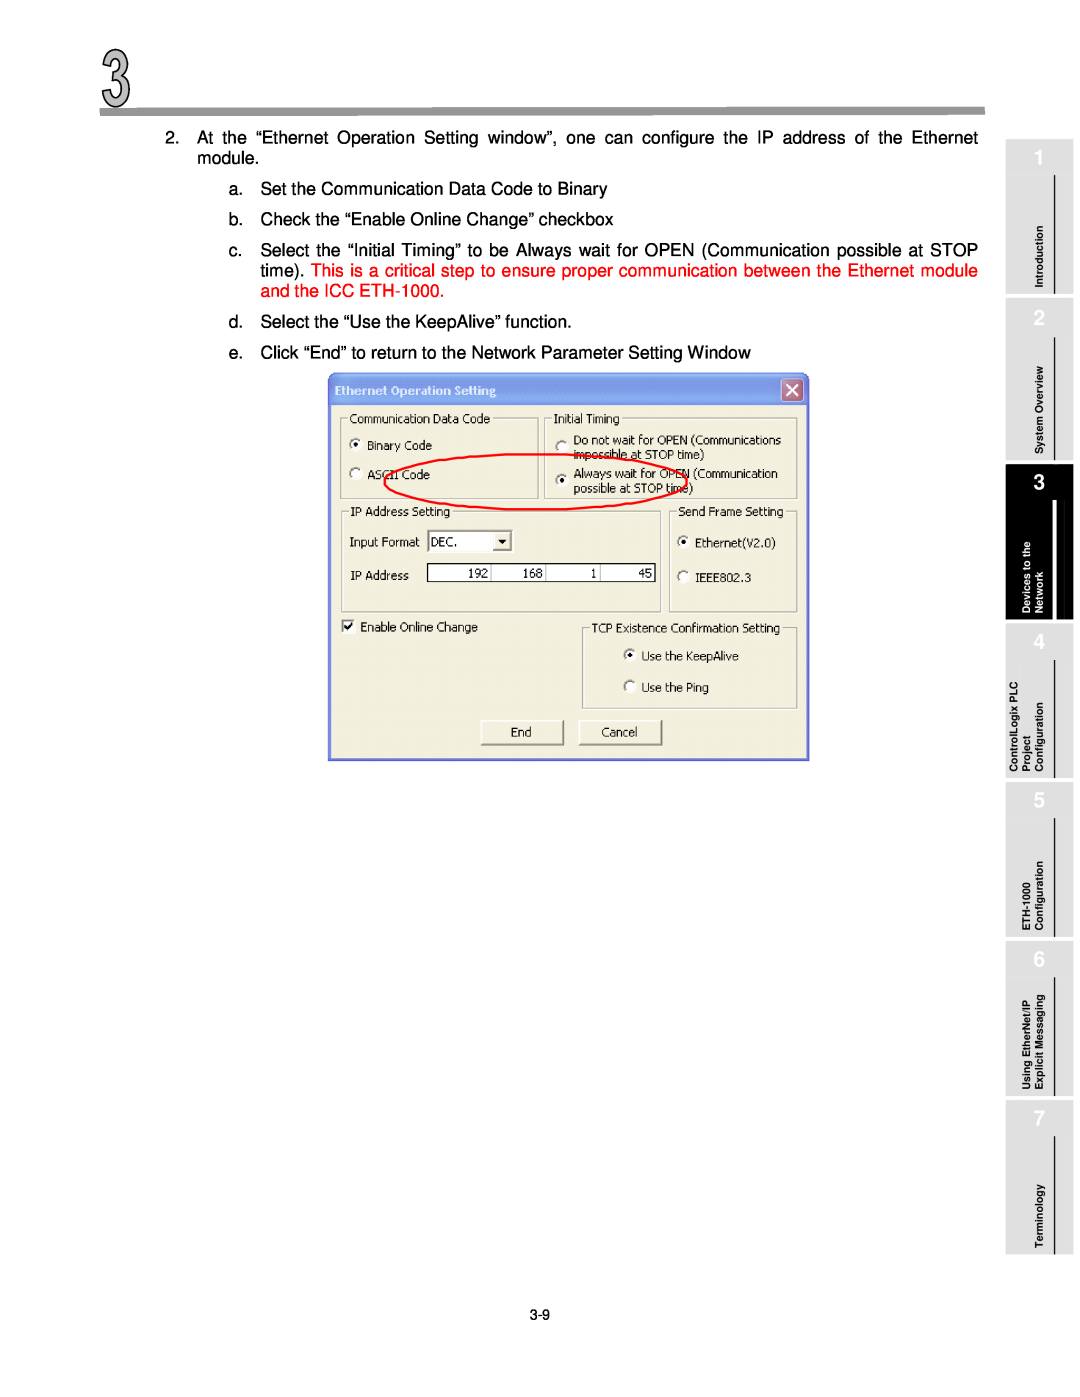 Mitsubishi Electronics ETH-1000 manual a. Set the Communication Data Code to Binary 